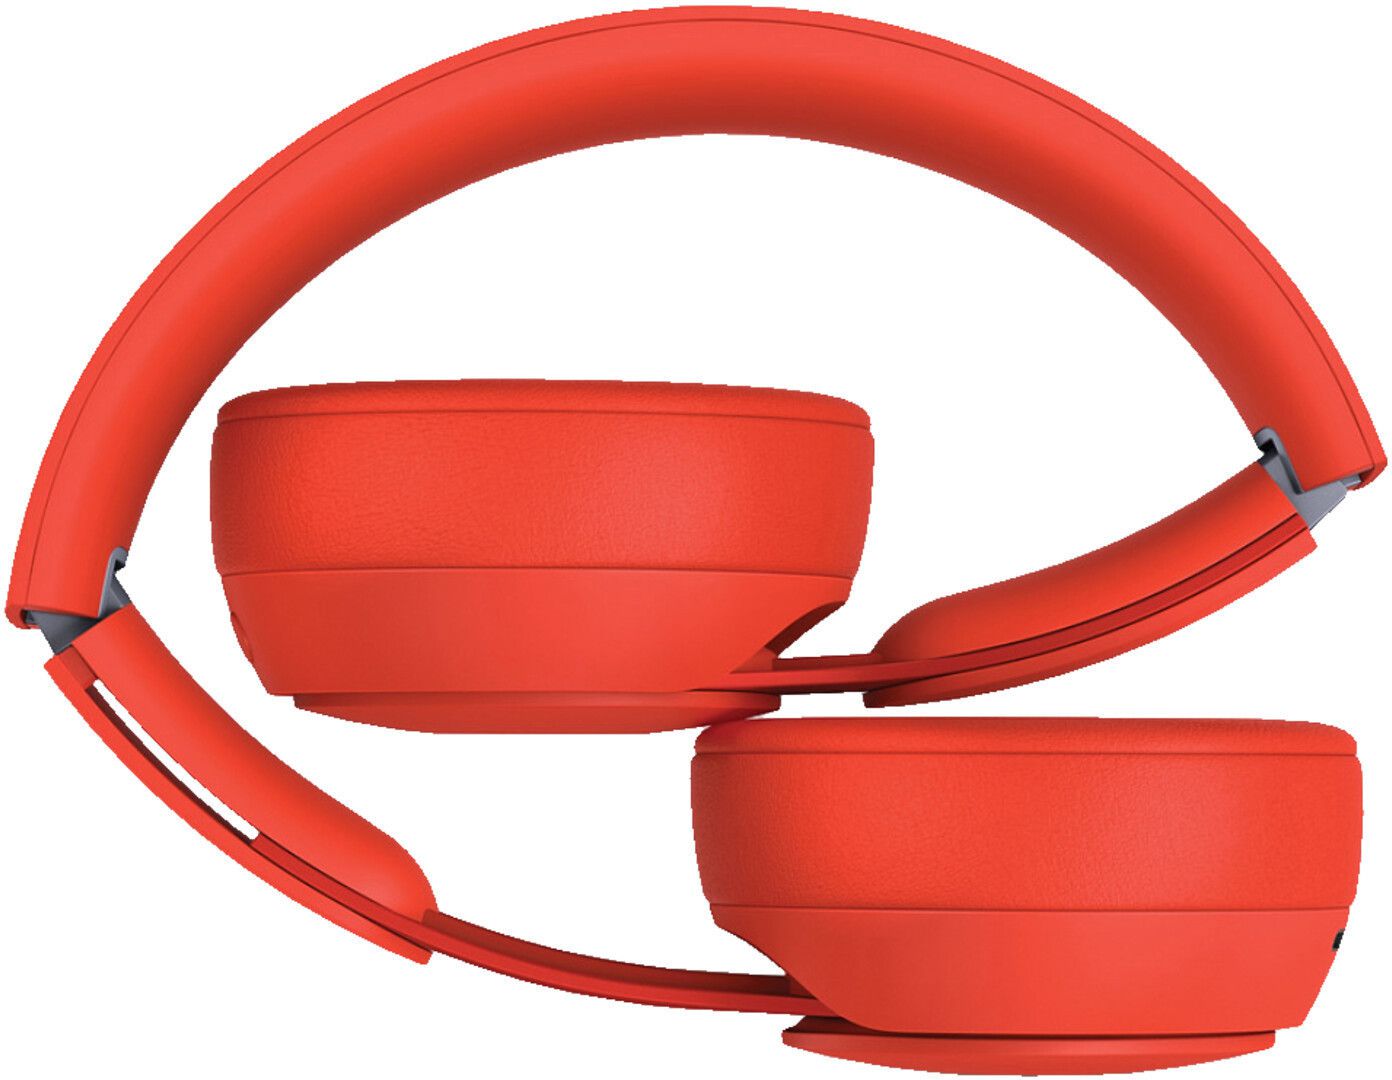 Beats Solo Pro On ear wireless Kopfhörer mit ANC in Rot für 110,48€ (statt 180€)